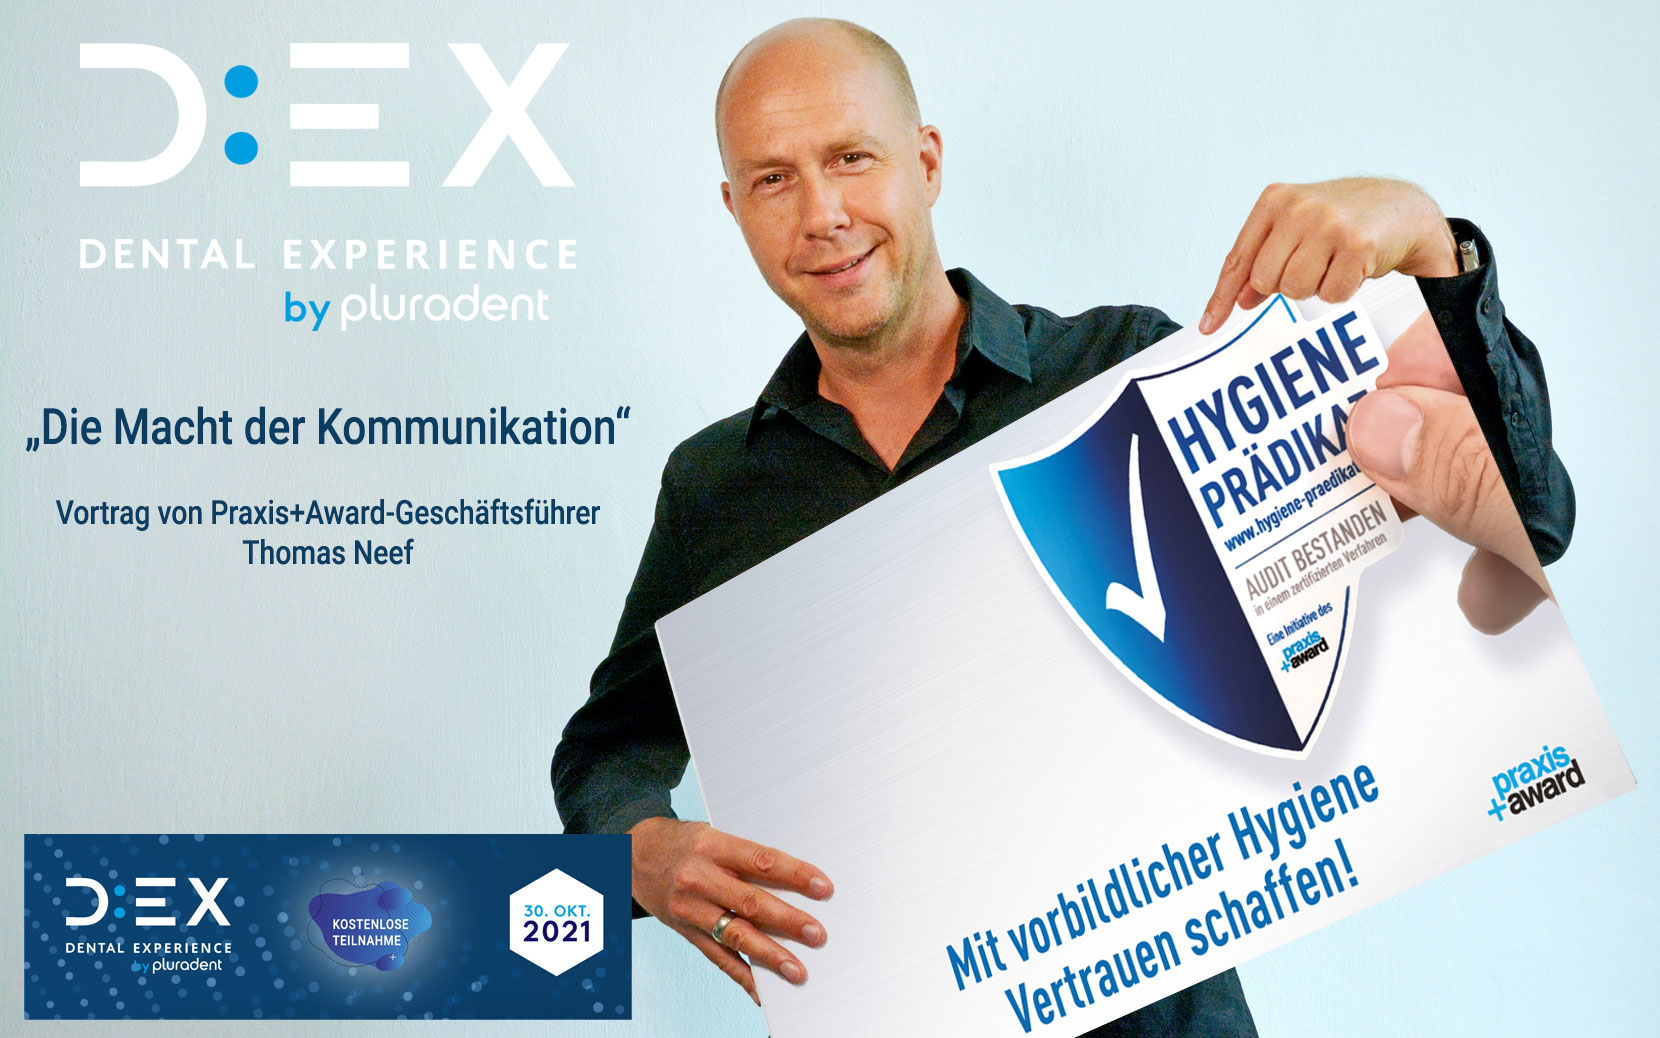 D:EX 2.0 am 30.10.2021 – mit dem Praxis+Award